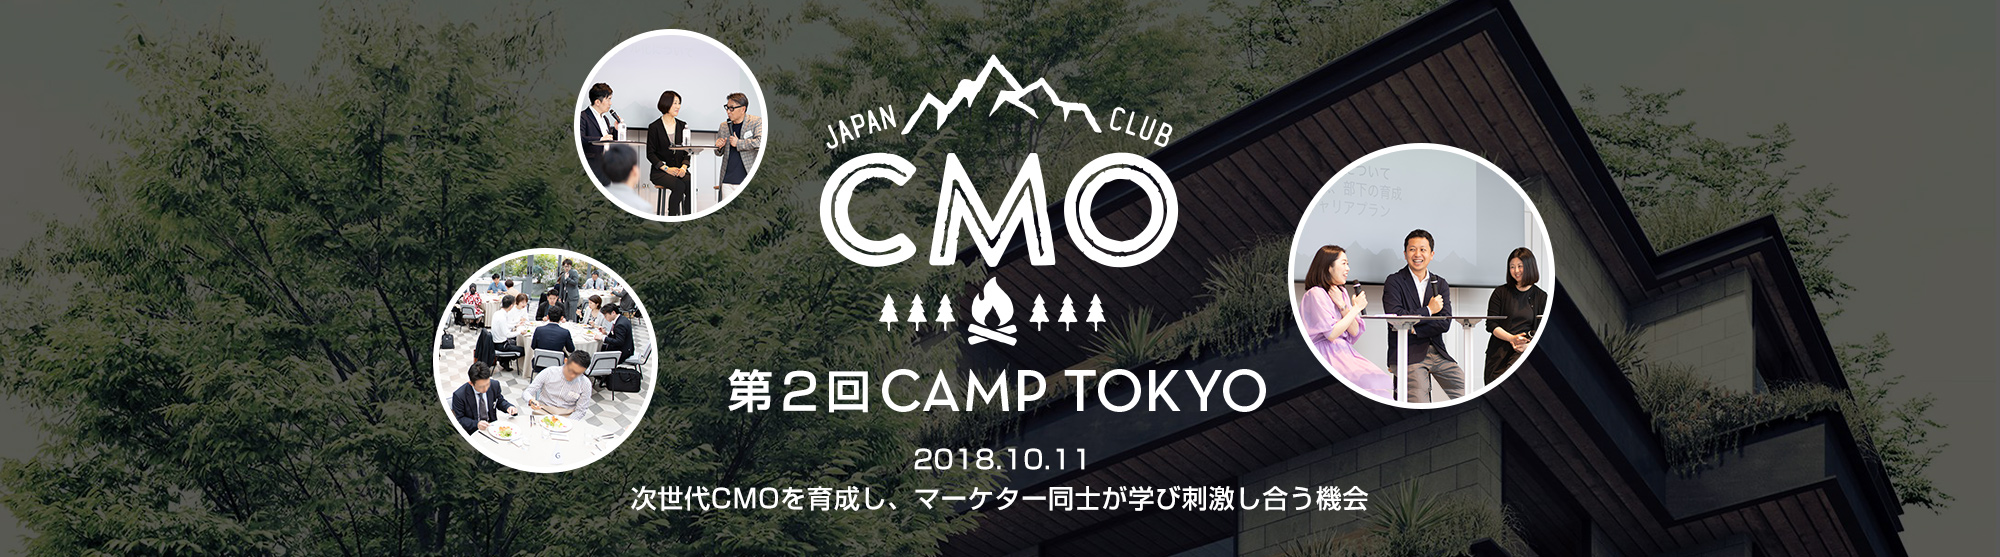 JAPAN CMO CLUB - CAMP TOKYO